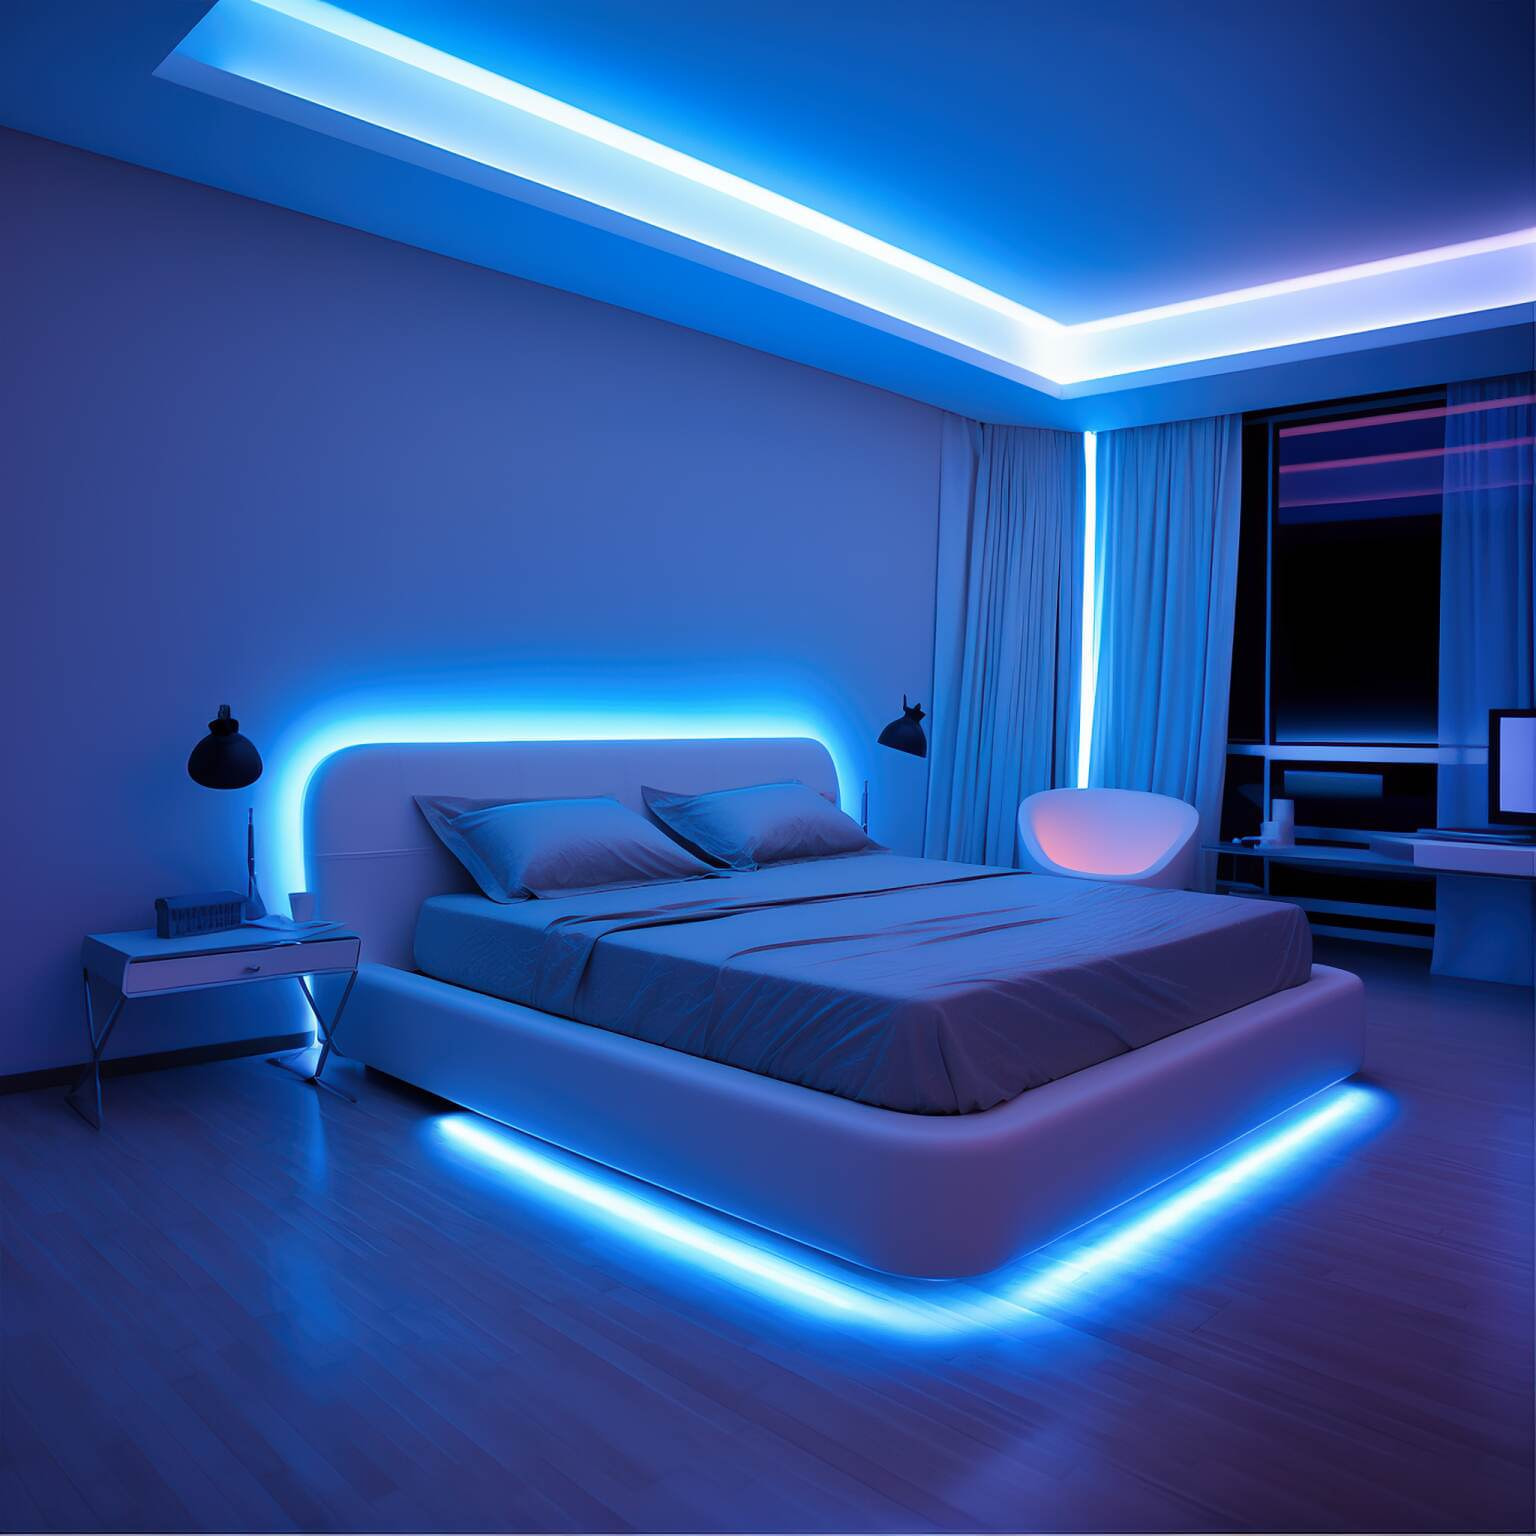 Minimalist White And Blue Neon Bedroom